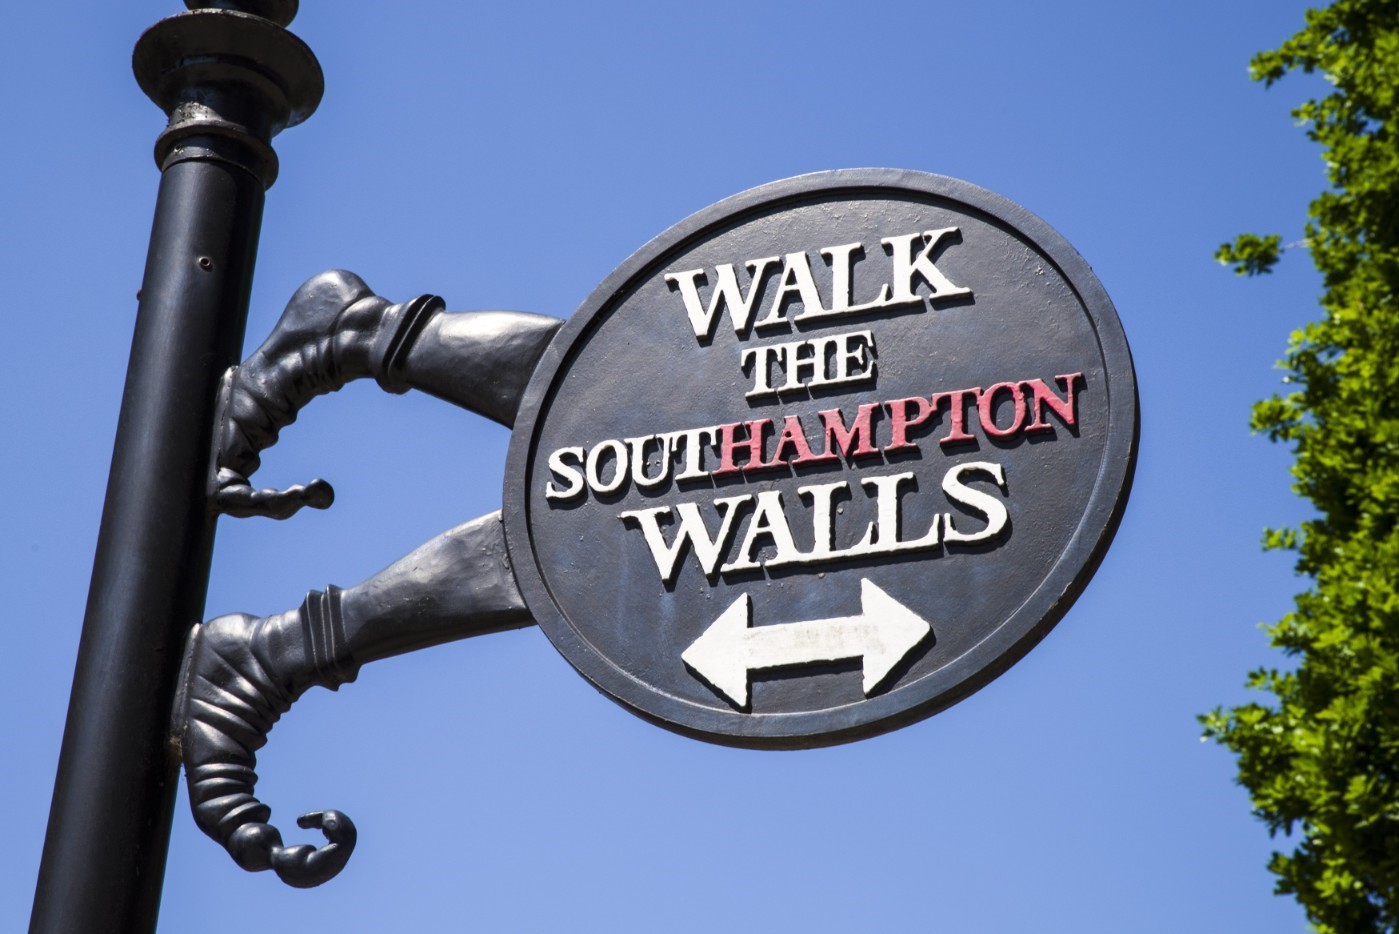 Walk the old walls Southampton